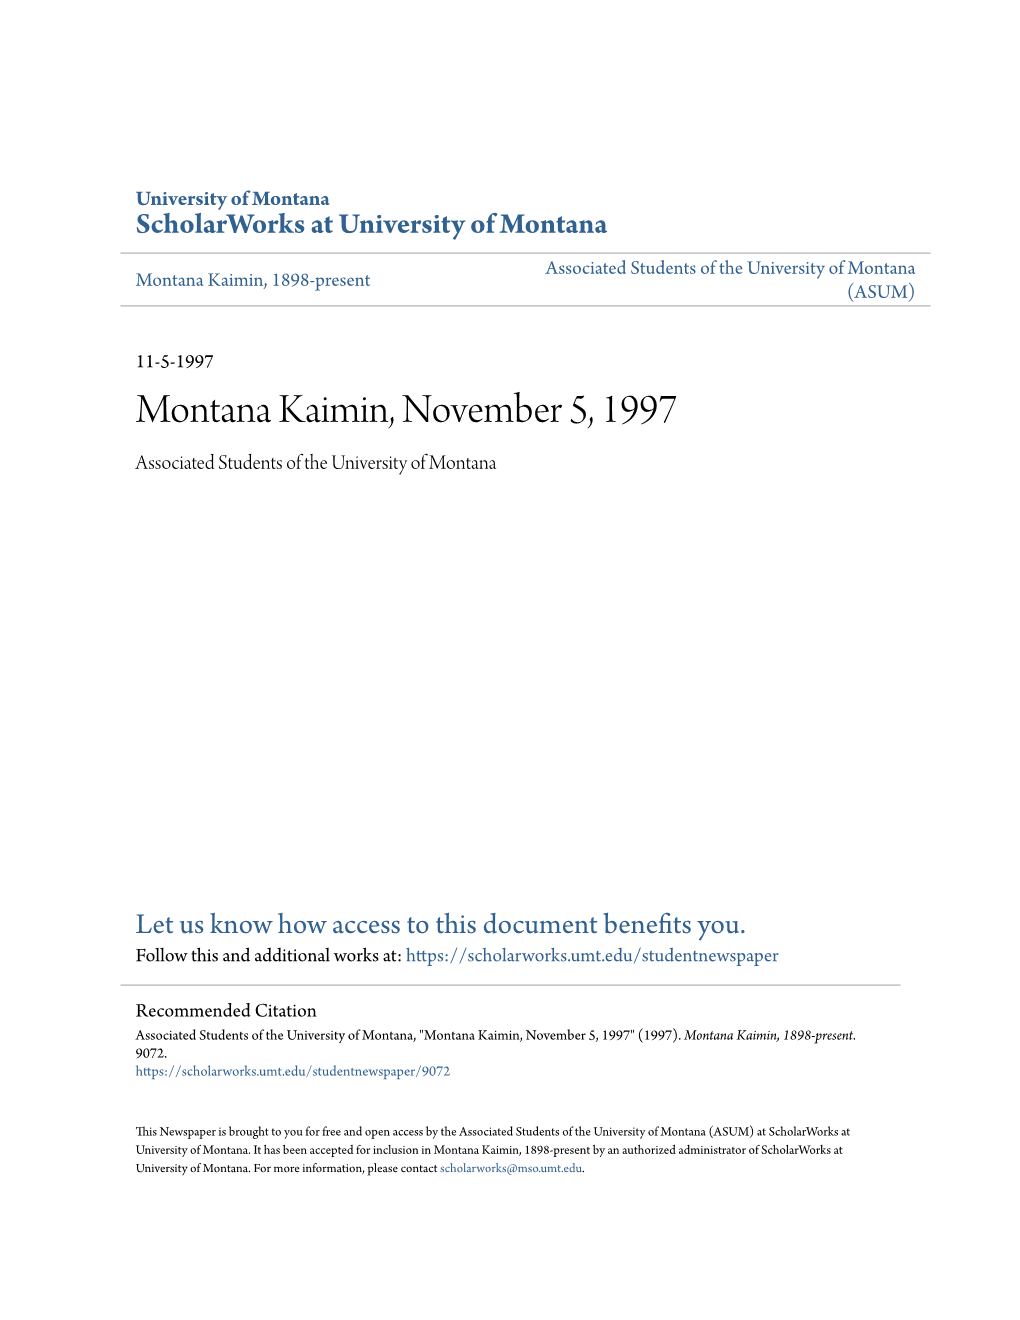 Montana Kaimin, November 5, 1997 Associated Students of the University of Montana